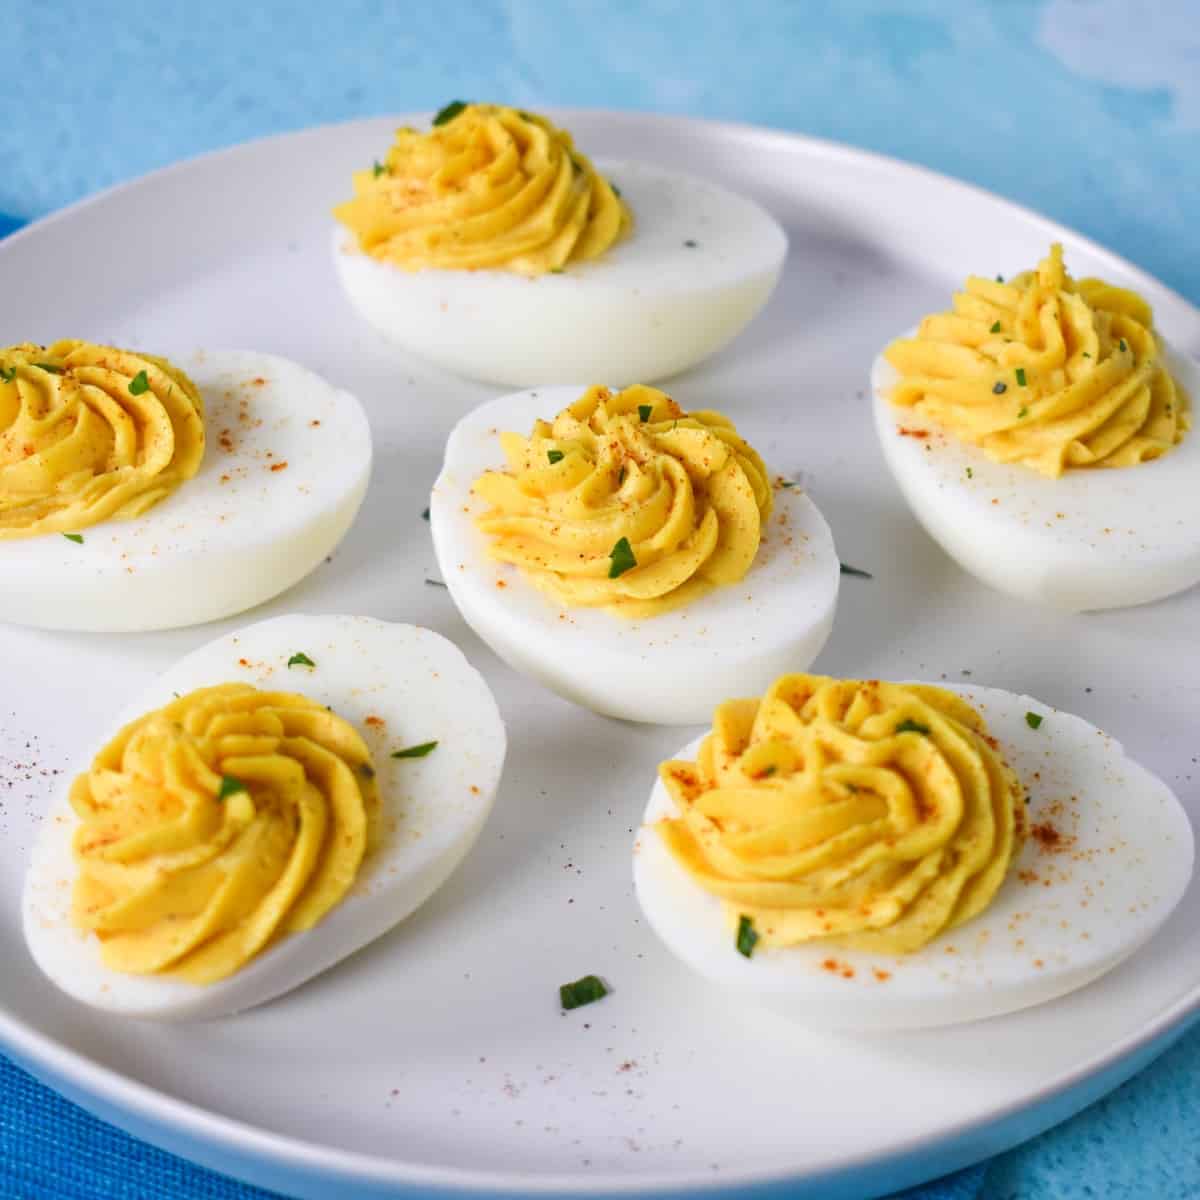 https://www.cook2eatwell.com/wp-content/uploads/2021/12/deviled-eggs-image-1.jpg